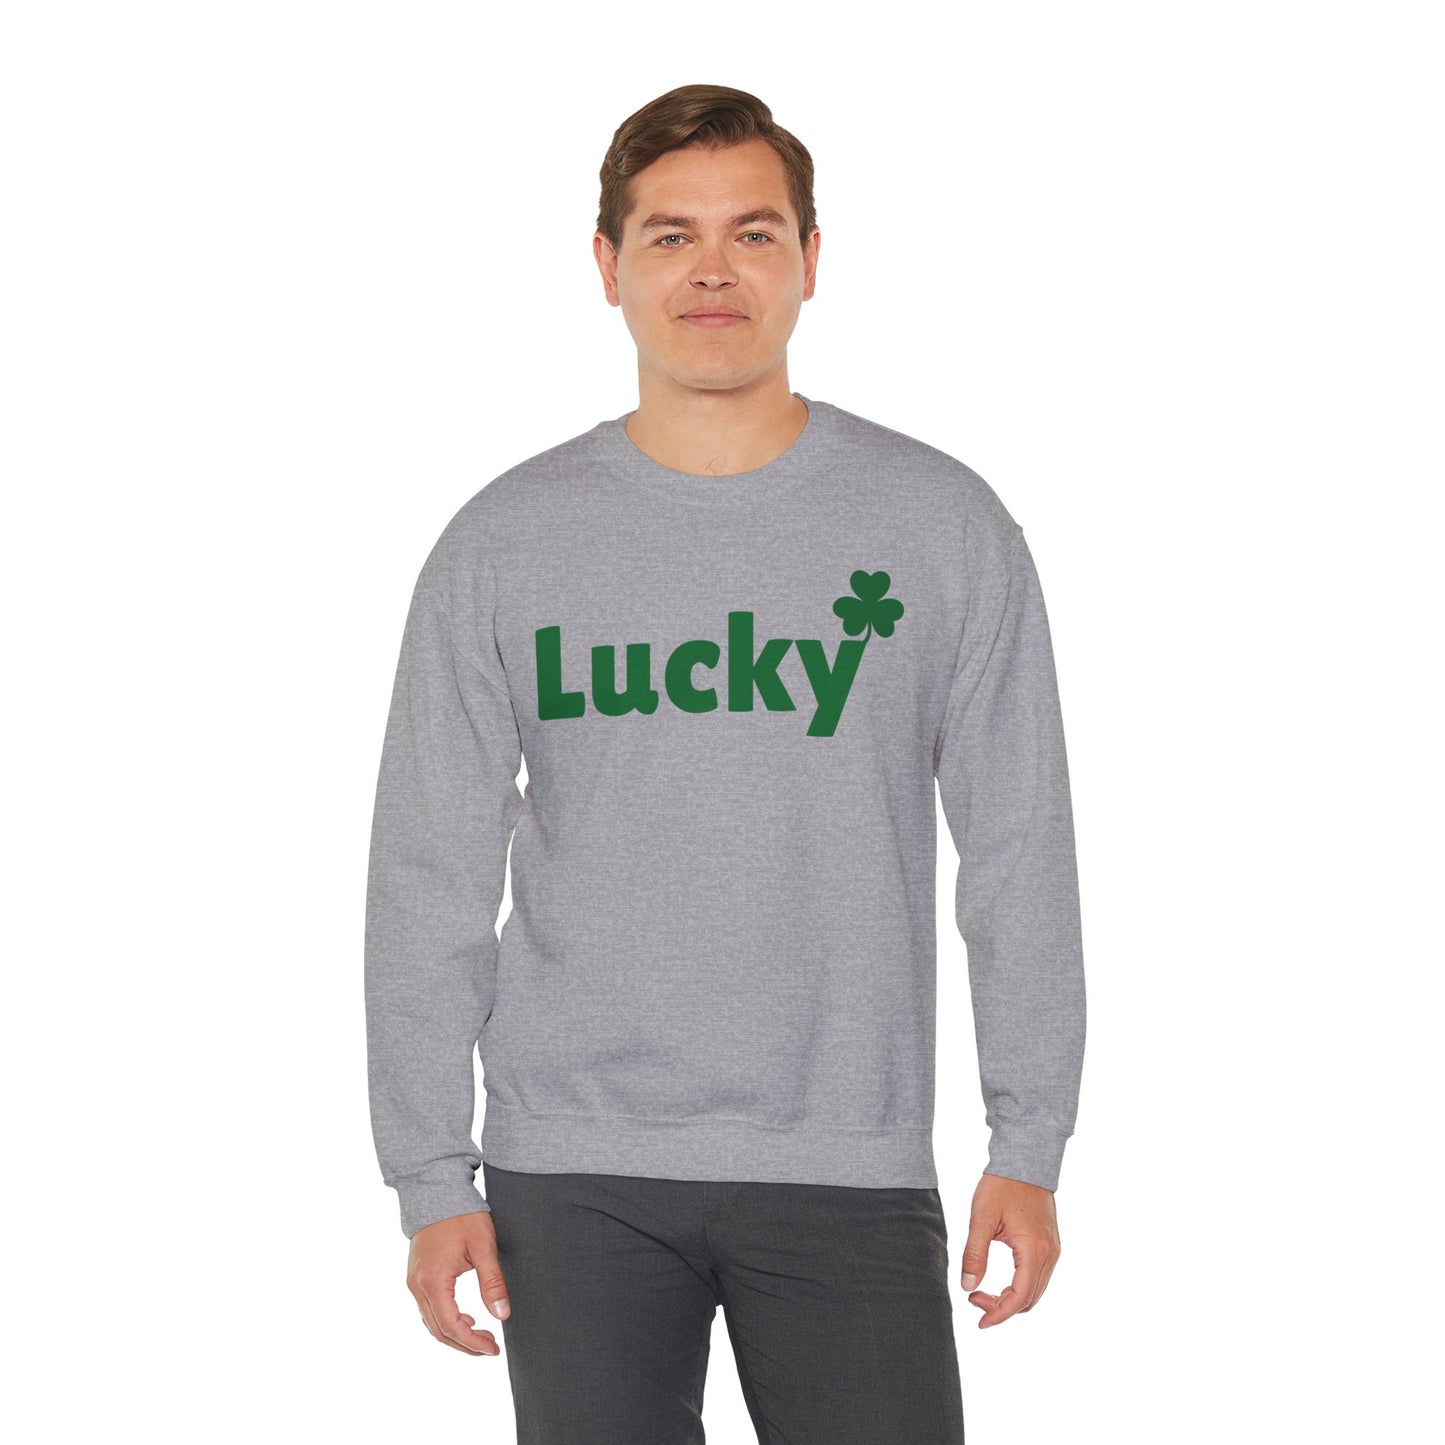 LUCKY Sweater, Clover Shirt St Patricks Day Sweater for Women and Men